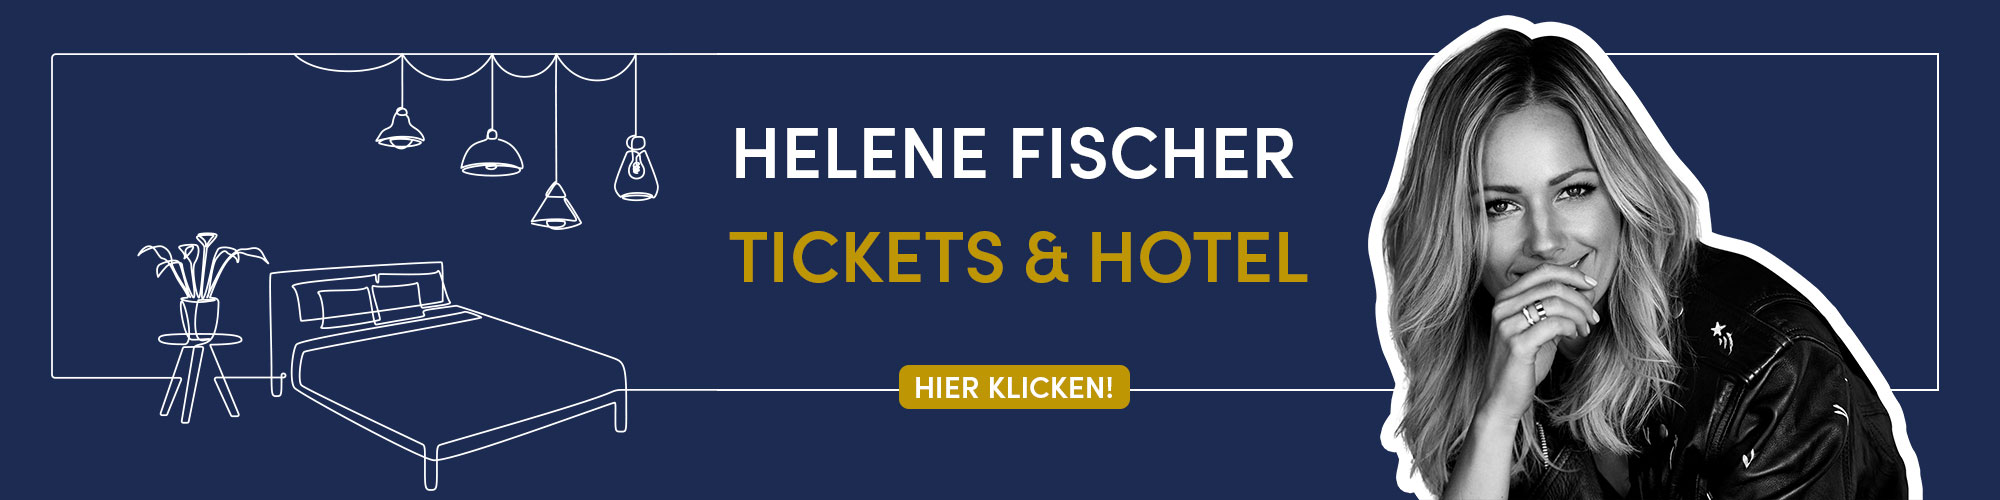 Banner_Helene-Fischer_Tickets-Hotel_2000x500_Jun2022_V1